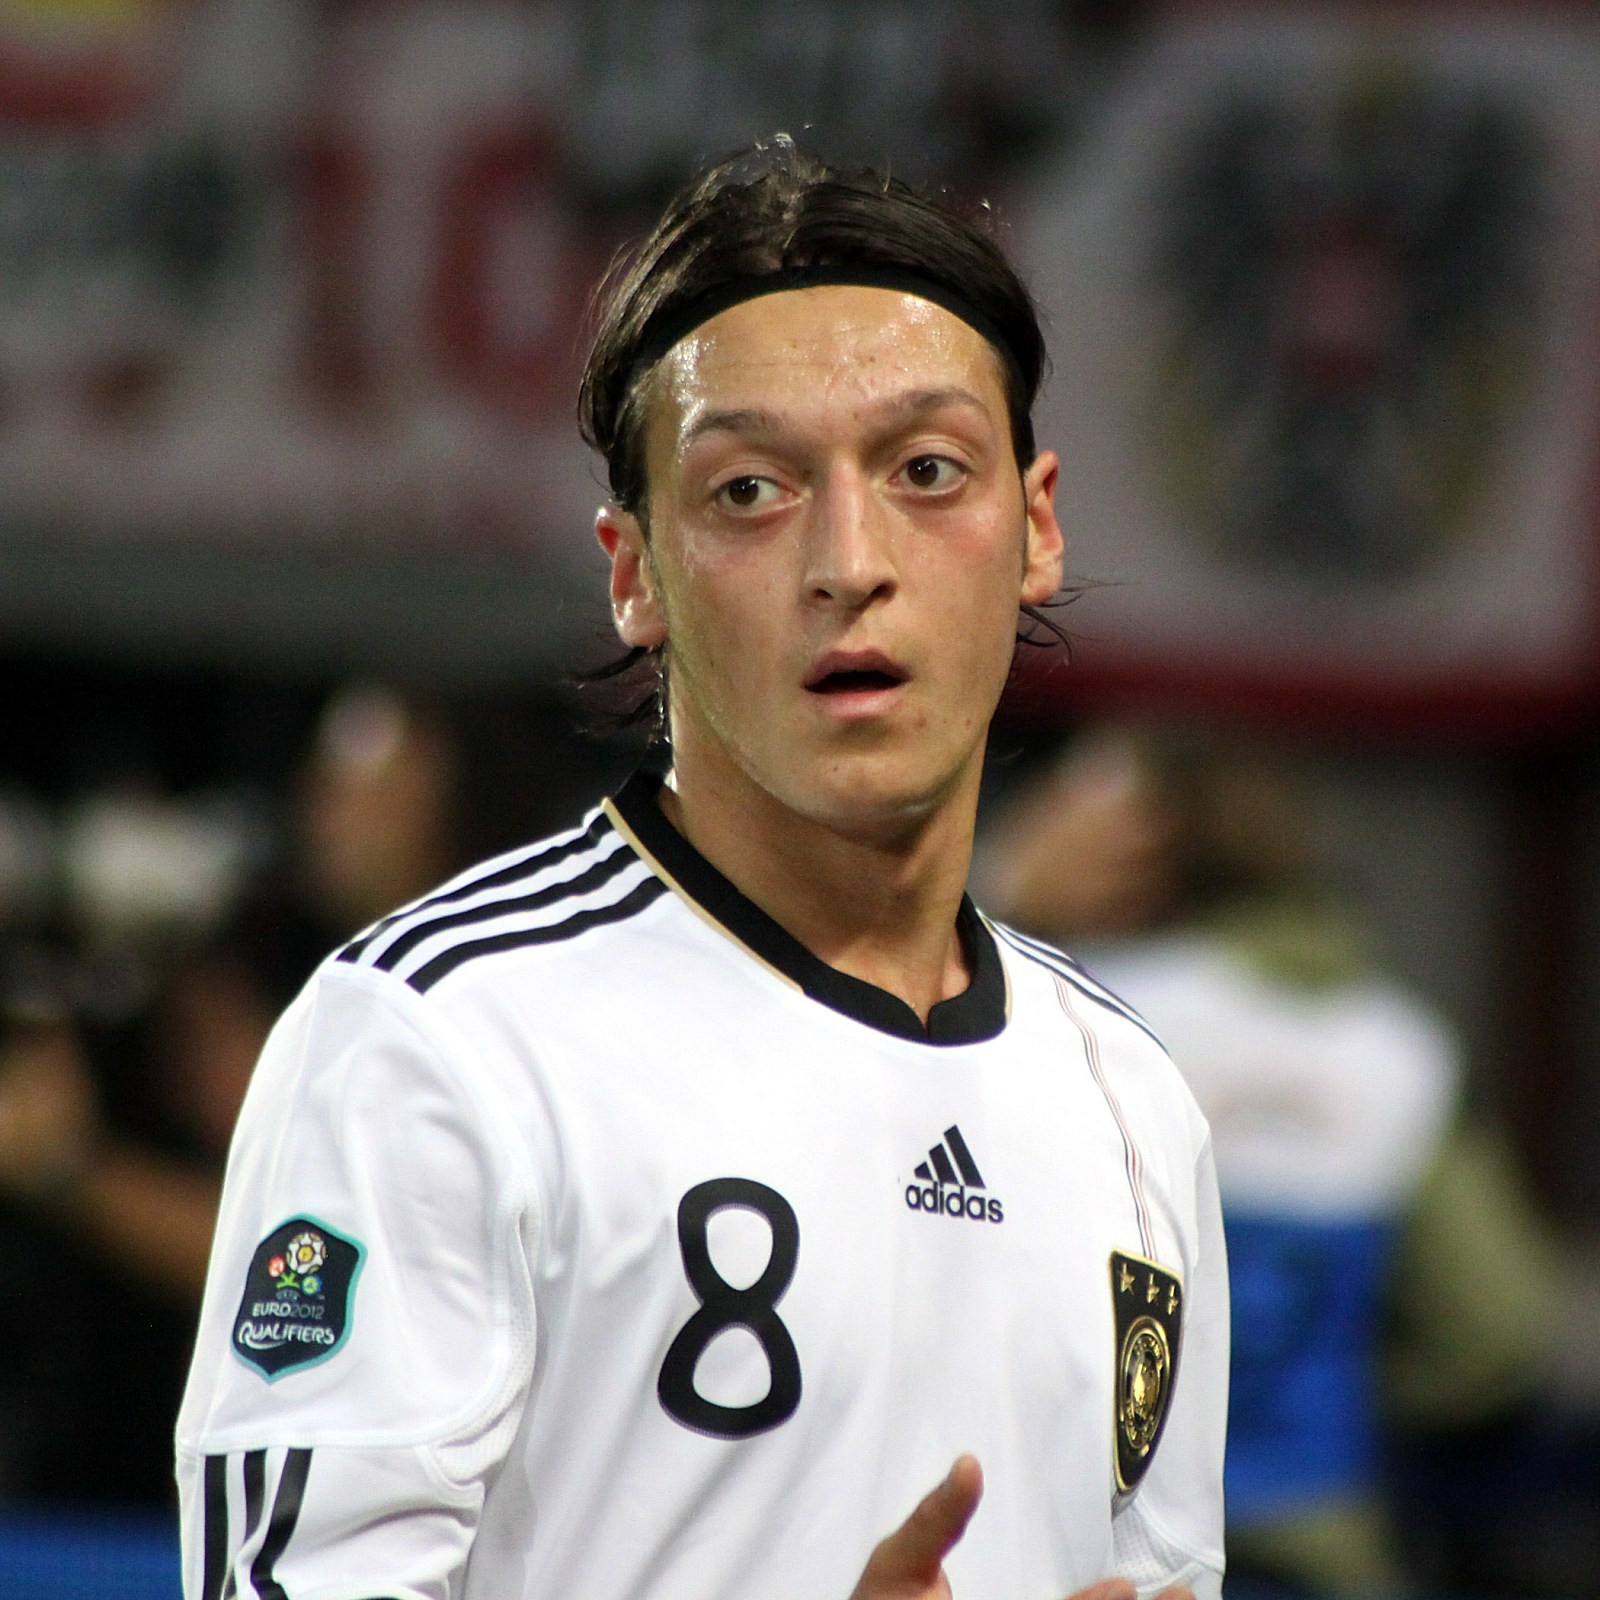 File:Mesut Özil, Germany national football team (02).jpg - Wikimedia Commons